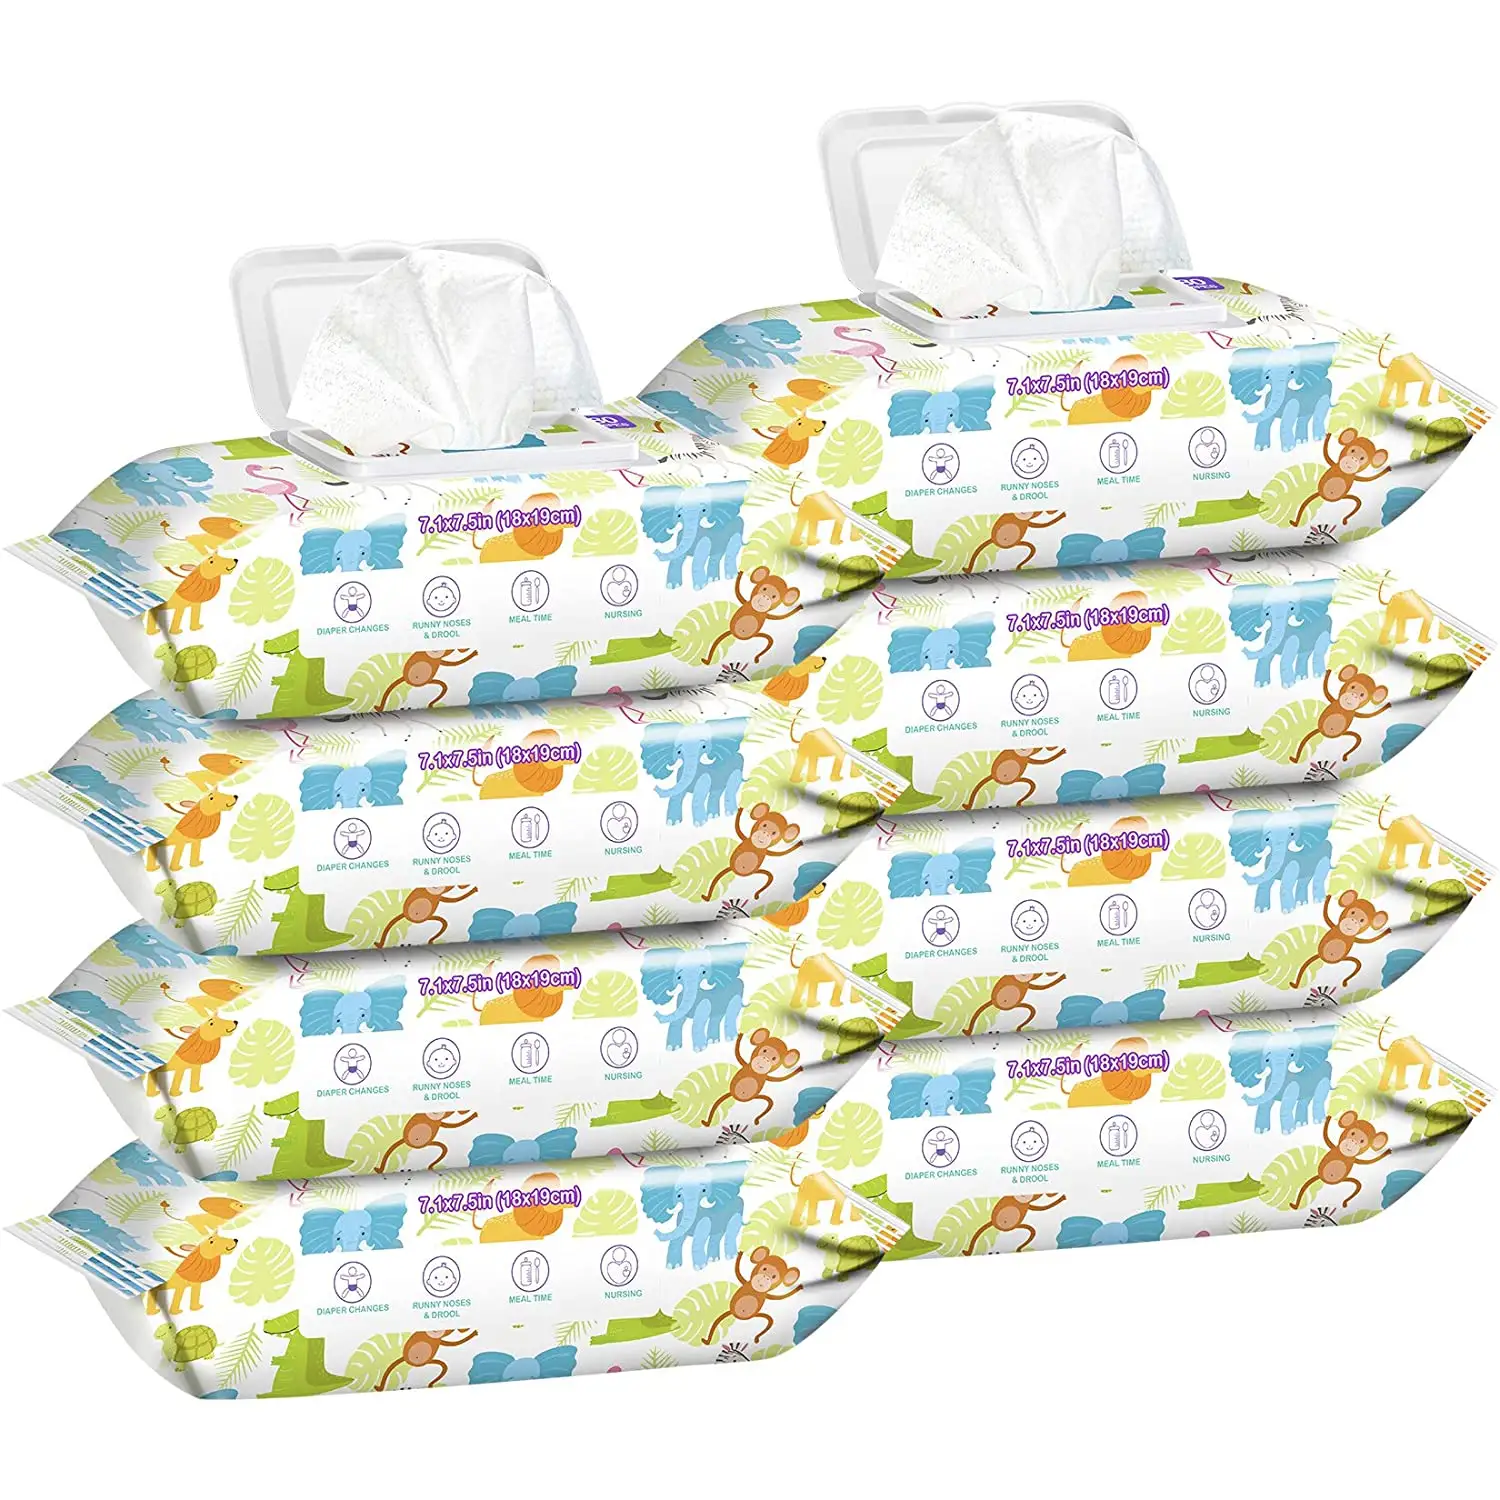 Toallitas húmedas biodegradables originales para bebé, toallitas no perfumadas de seguridad para bebé, precio barato personalizado, 80 Uds.